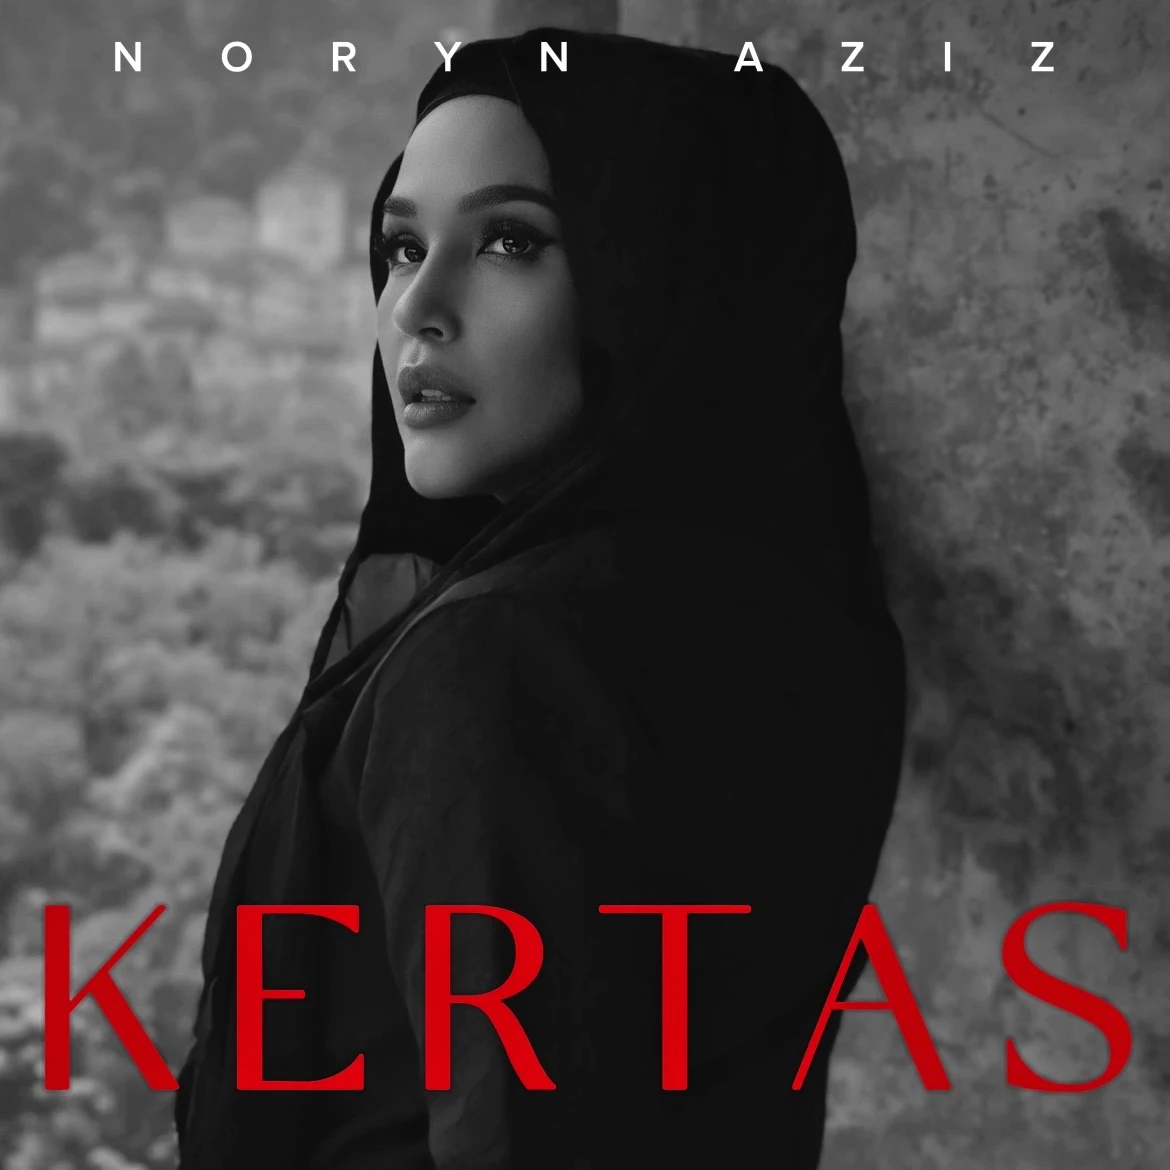 Lirik Kertas - Noryn Aziz (Drama Khun:Sa)